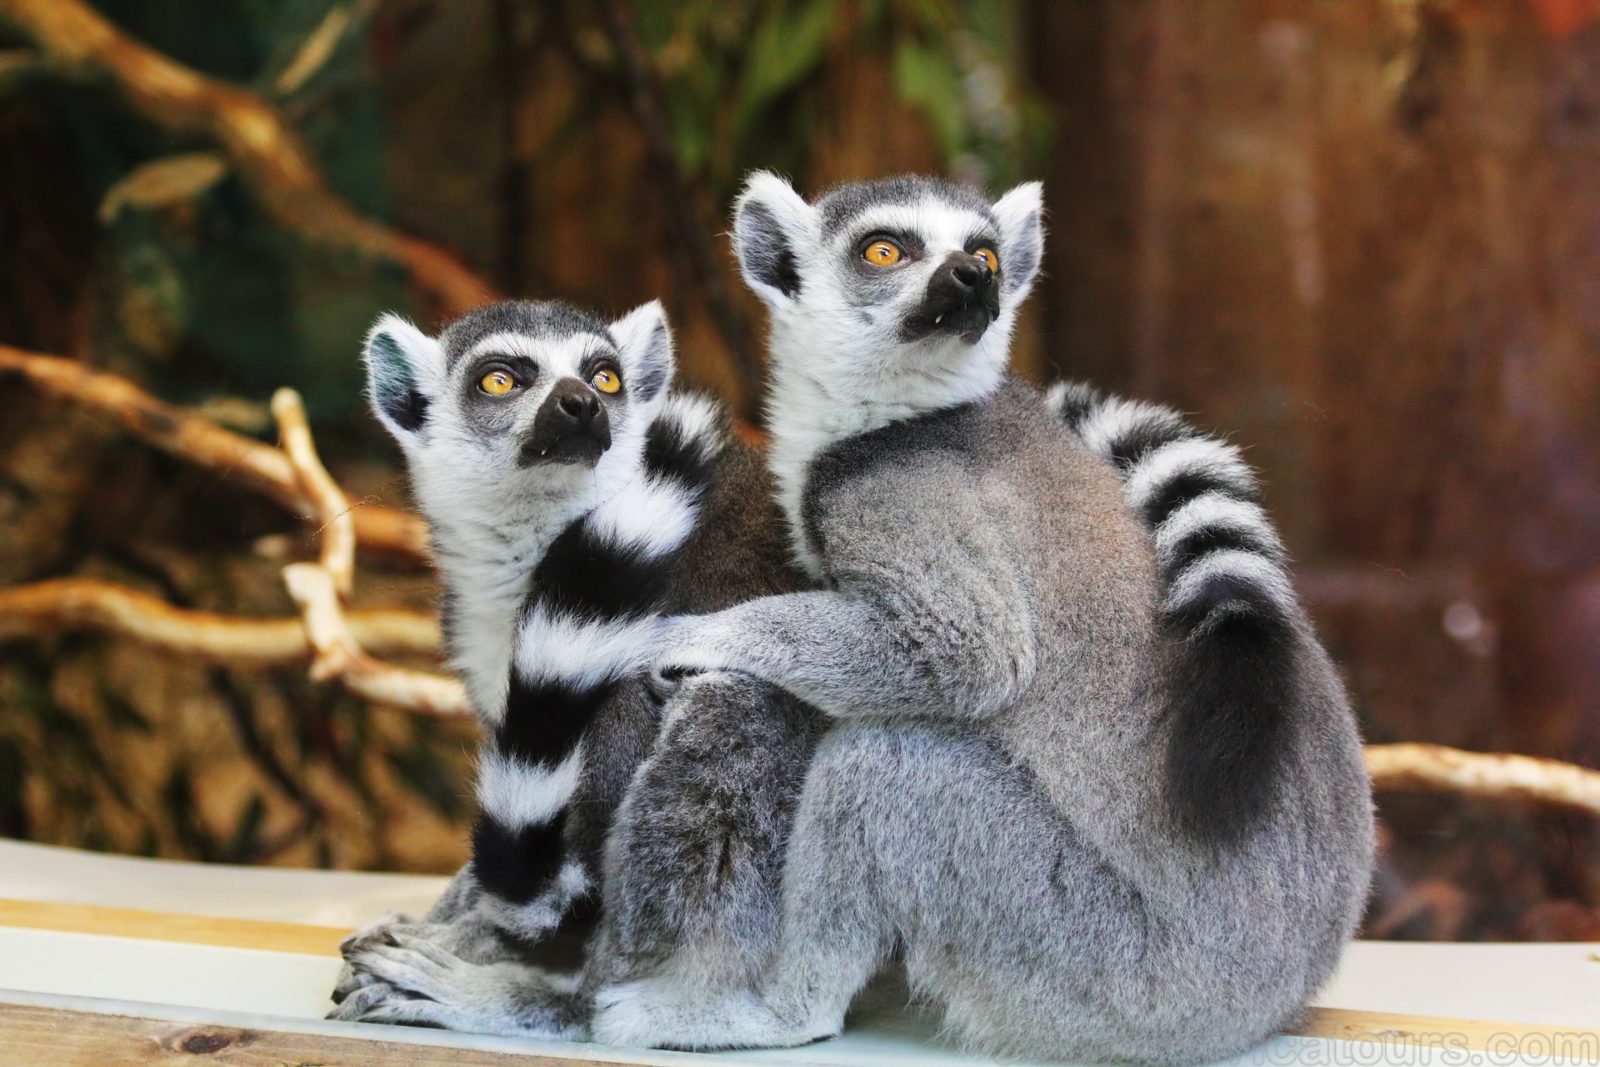 Madagascar Animals